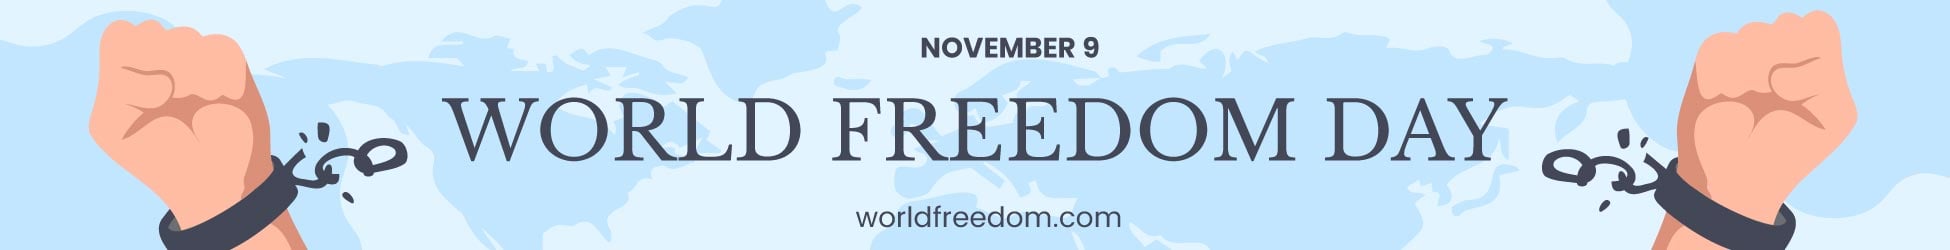 World Freedom Day Website Banner